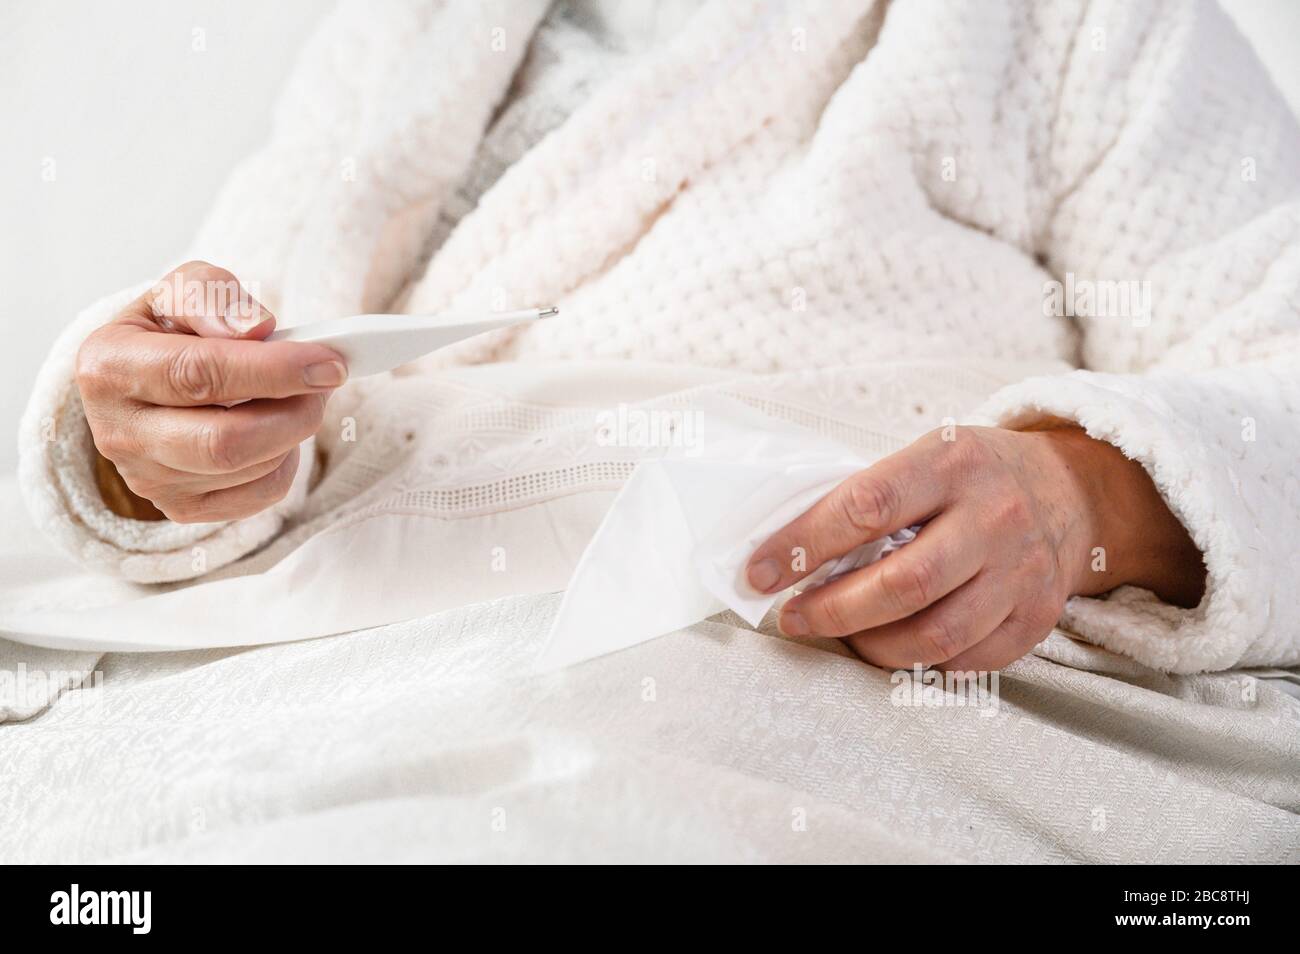 Coronavirus. Sick senior woman holding tissue and thermometer sit on bed, upset old mature woman caught cold got coronavirus flu influenza symptoms at home alone . Stock Photo